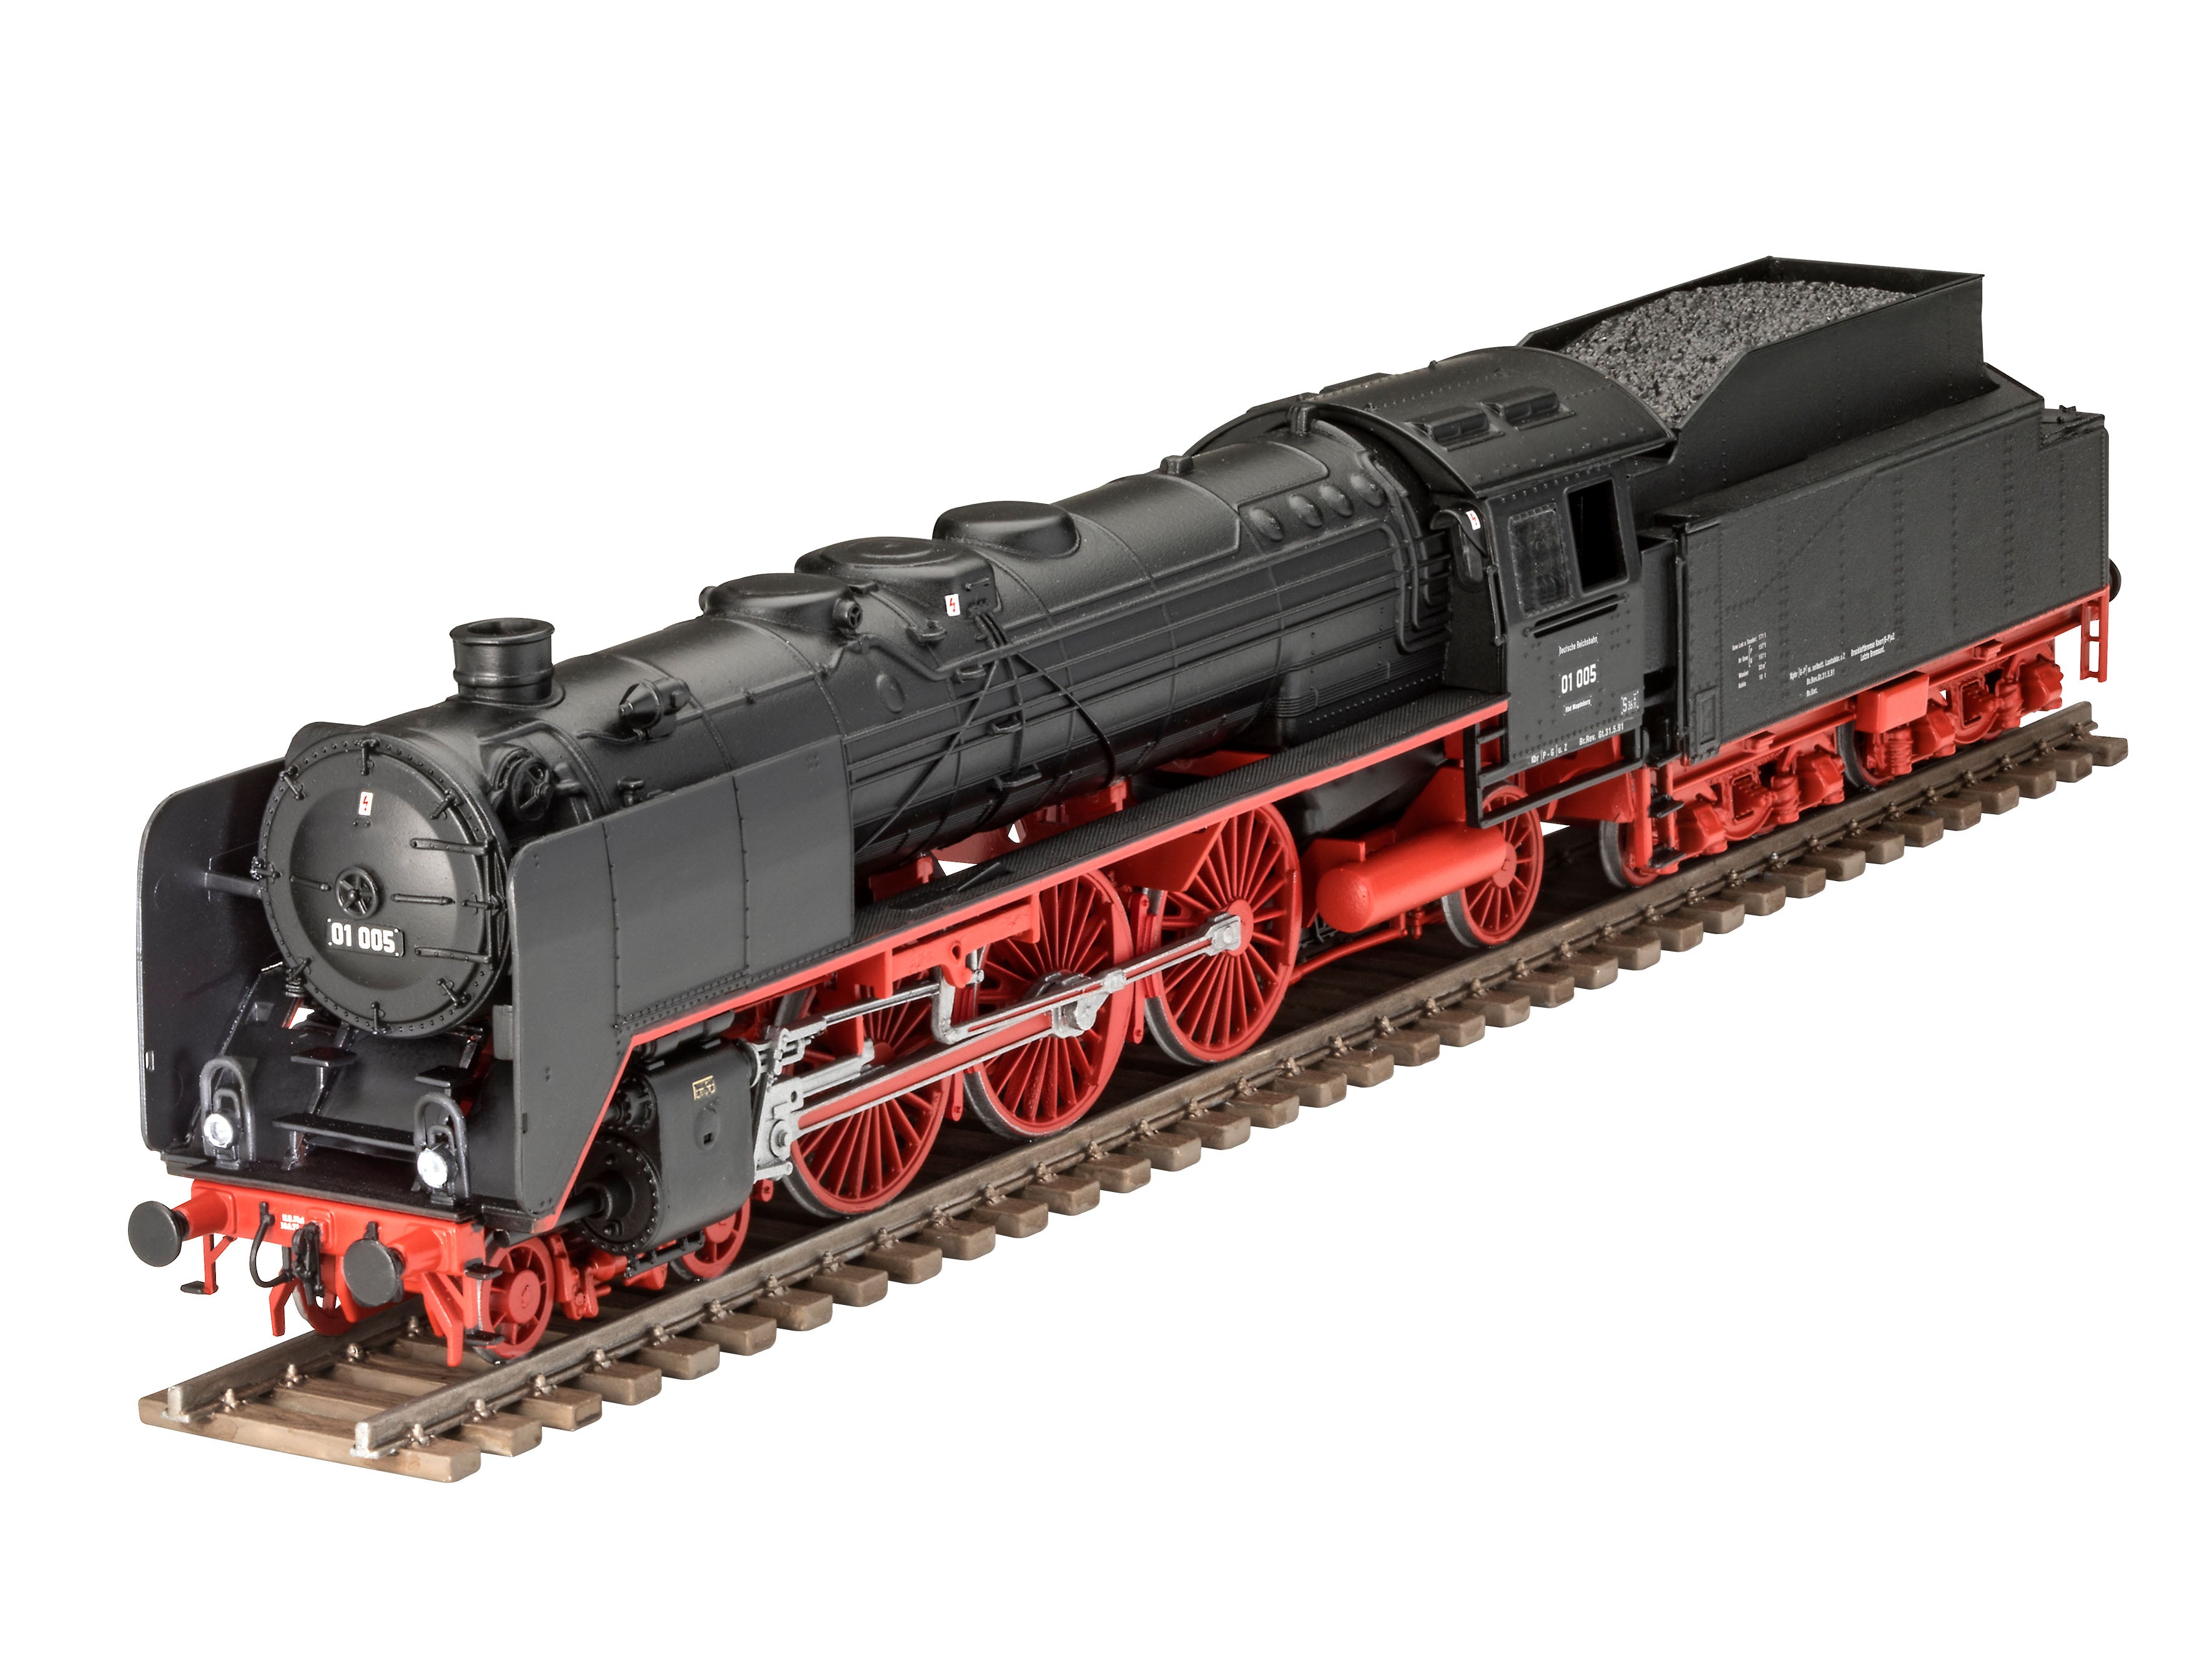 Revell 01 Class Heavy Express Locomotive 1:87 Train Model Building Kit